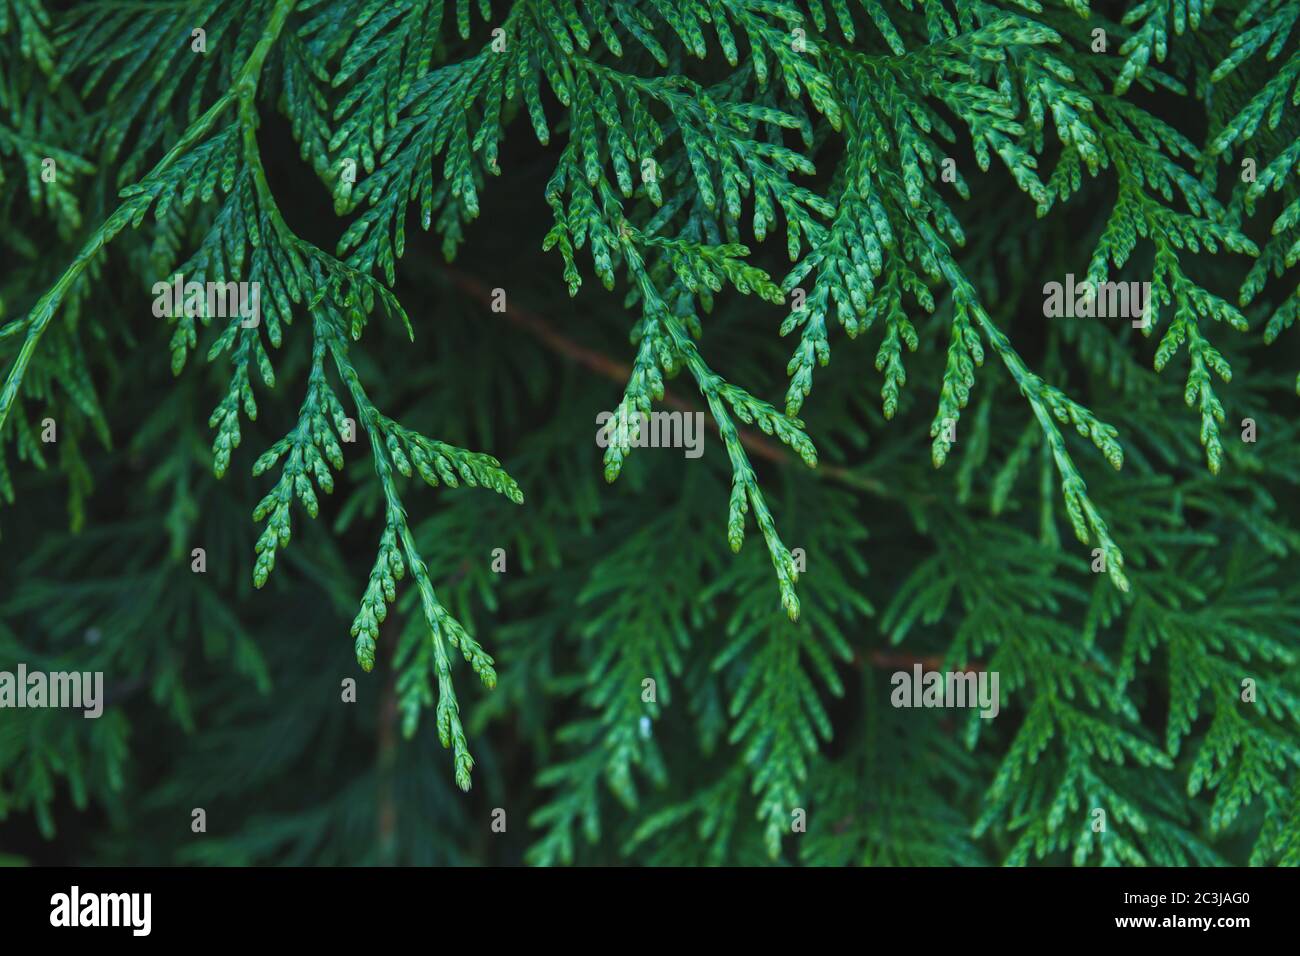 Detail of thuja tree green foliage Stock Photo